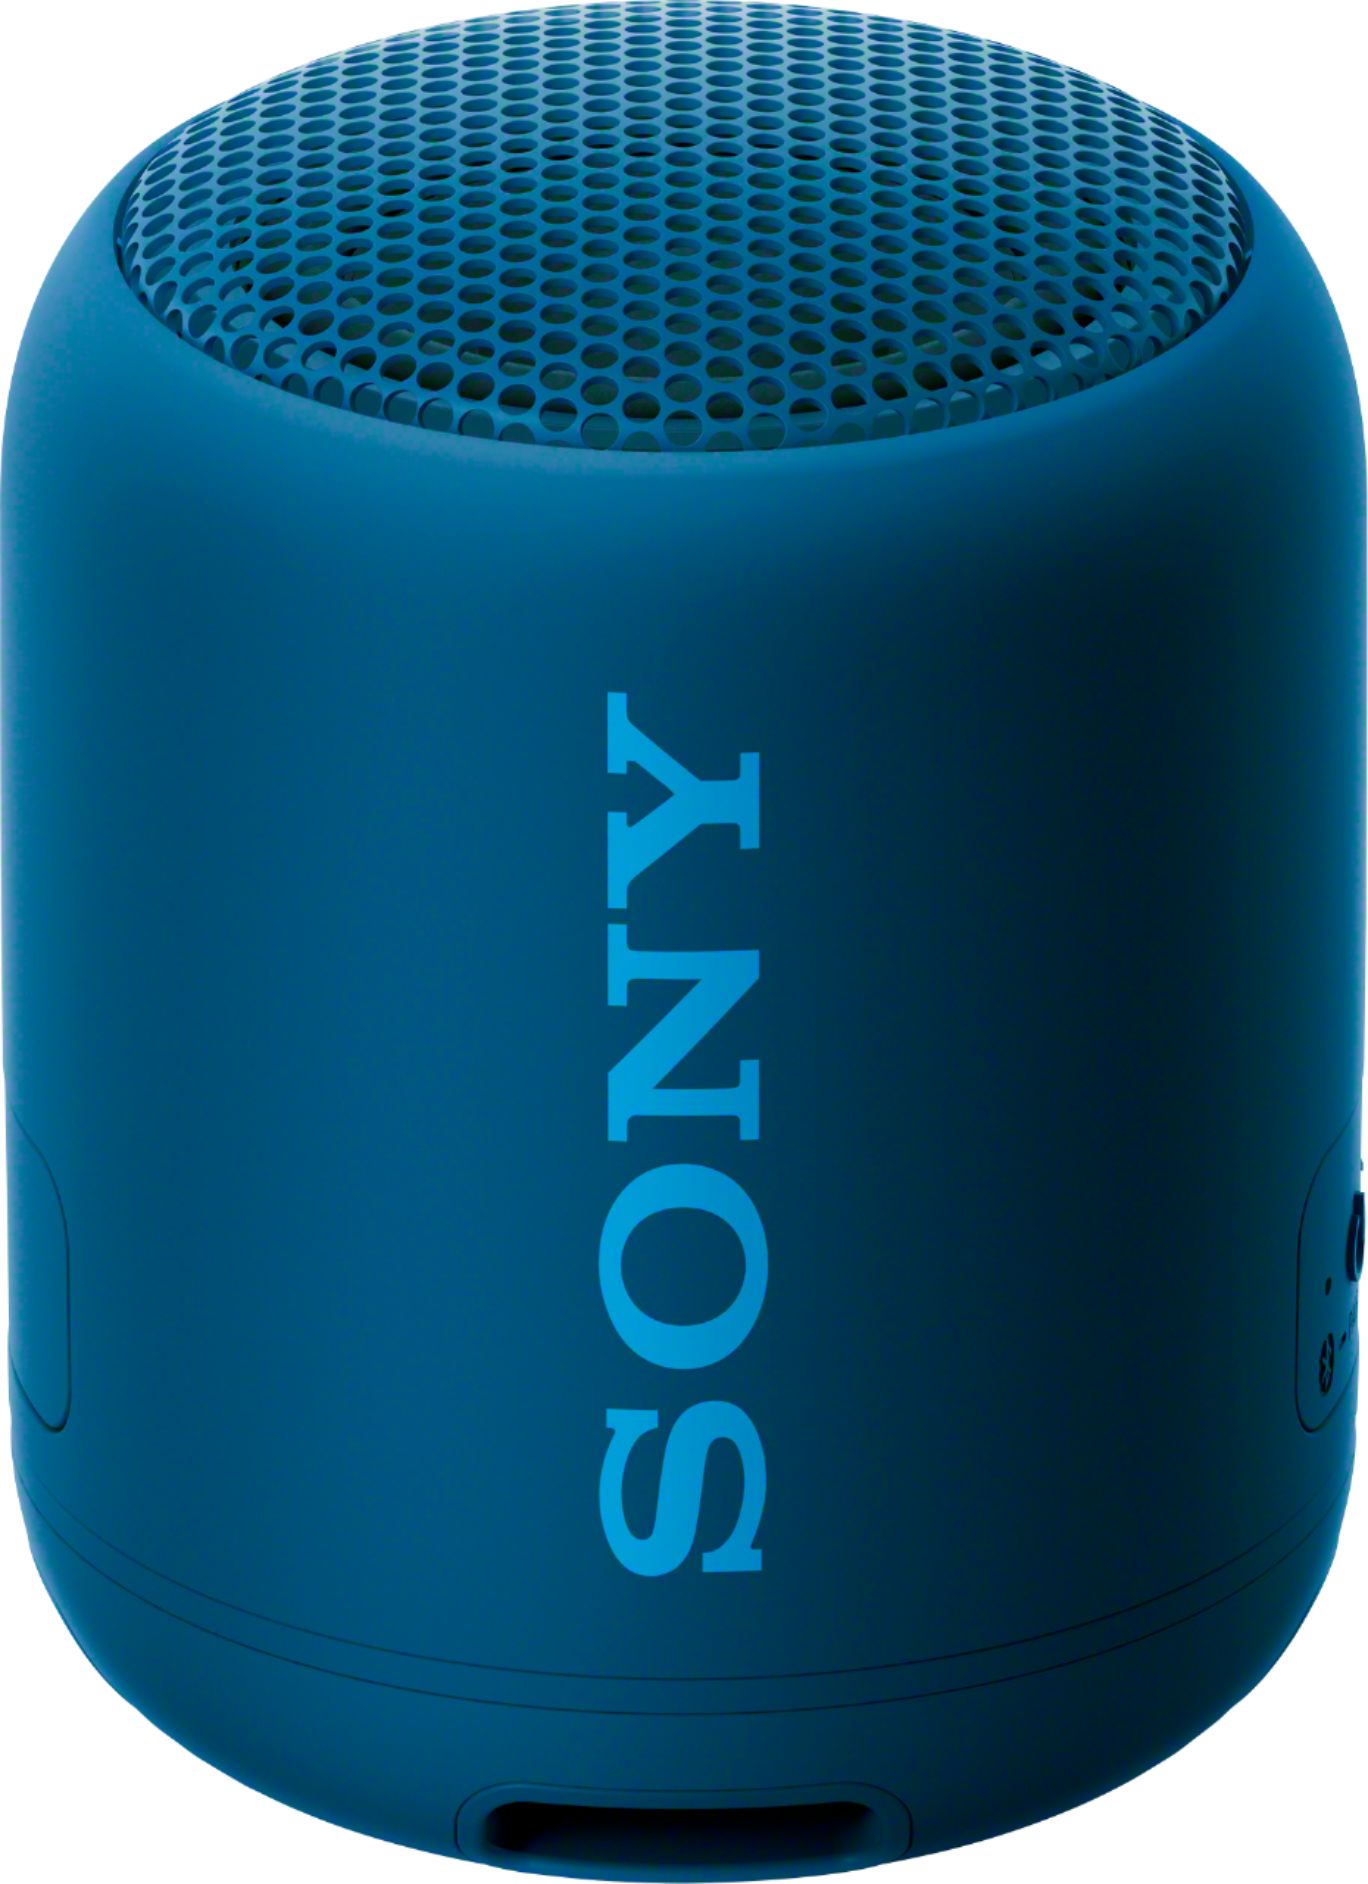 Sony Srs Xb12 Portable Bluetooth Speaker Blue Srsxb12 L Best Buy